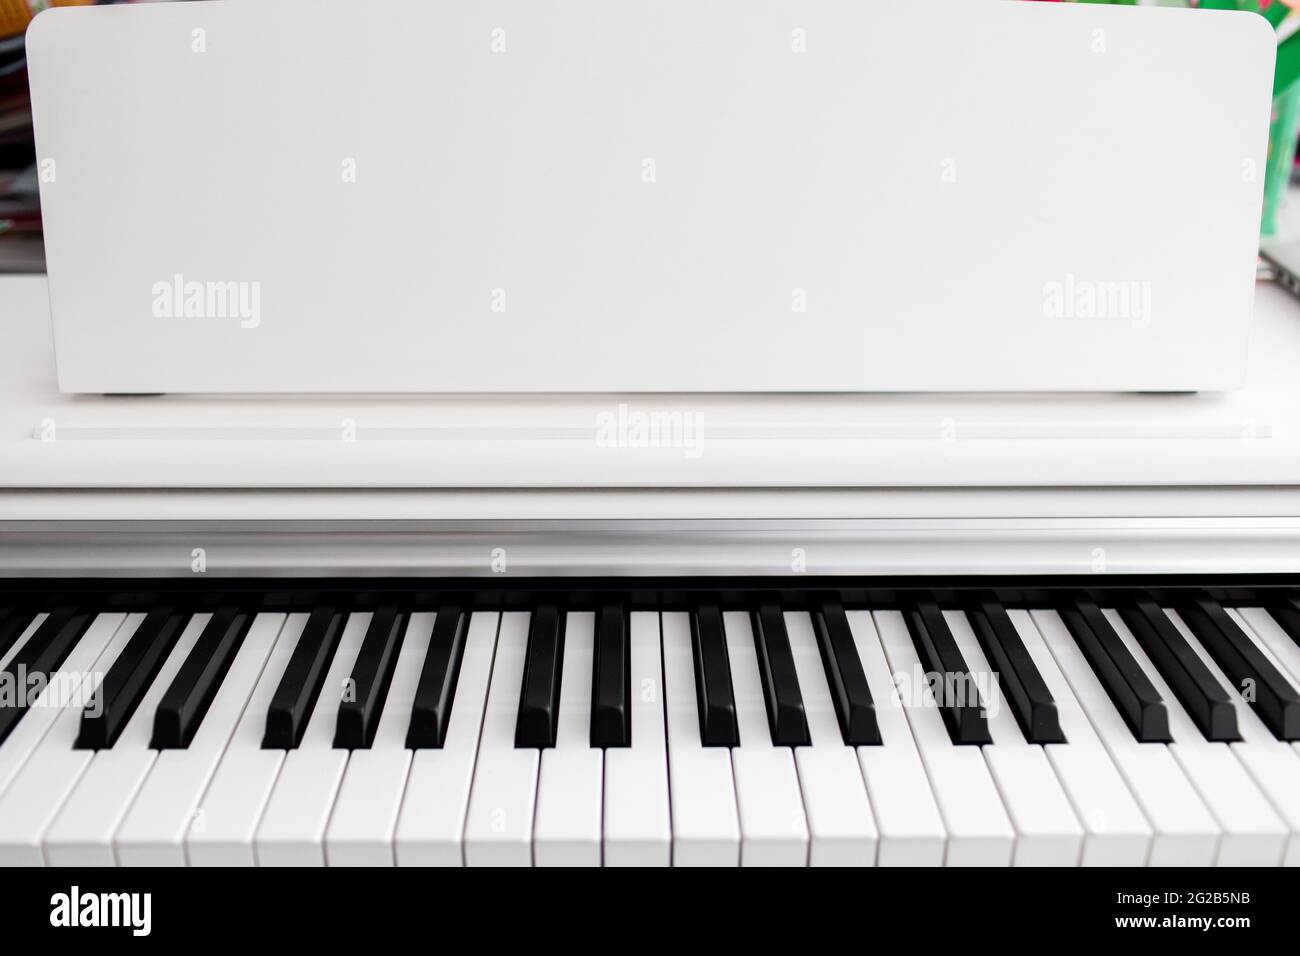 Modern Black and White Digital piano Stock Photo - Alamy